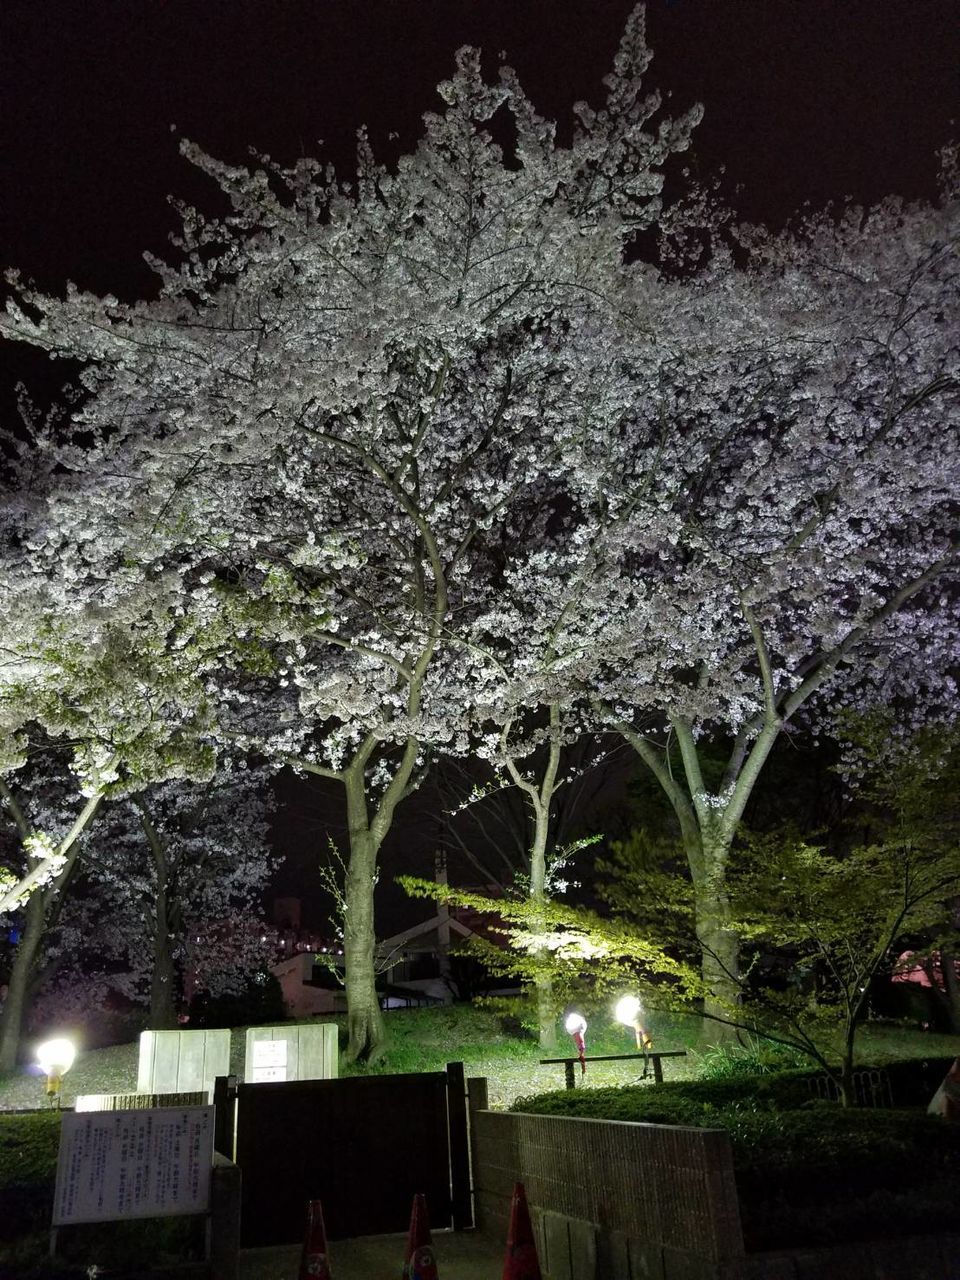 FLOWER TREES AT NIGHT